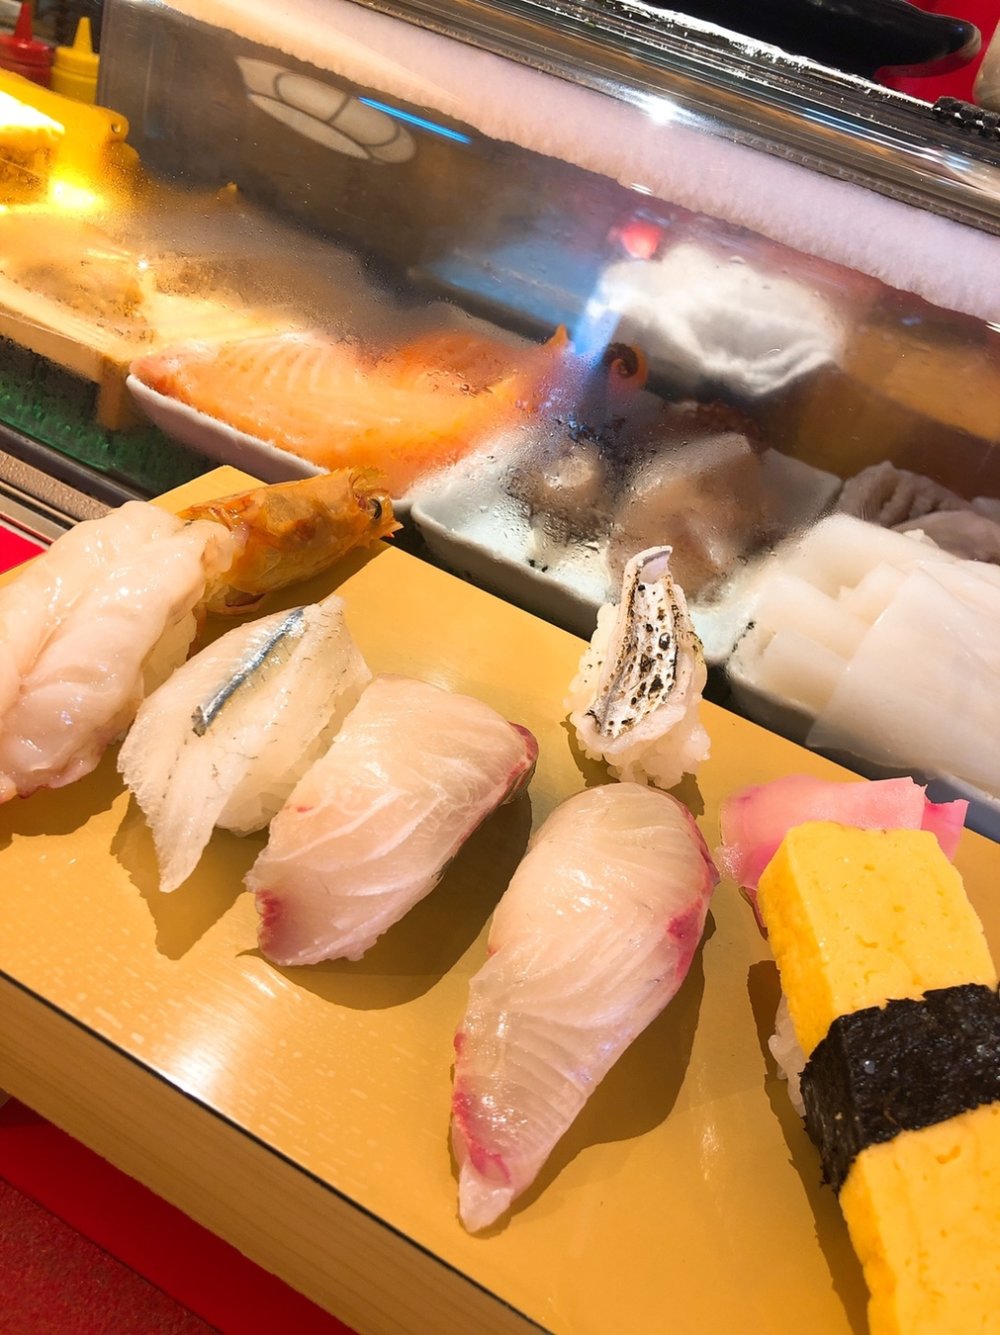 MITSUWAYA Staff Tipsy Mako's Recommendation Osaka gourmet "Sakae Sushi"